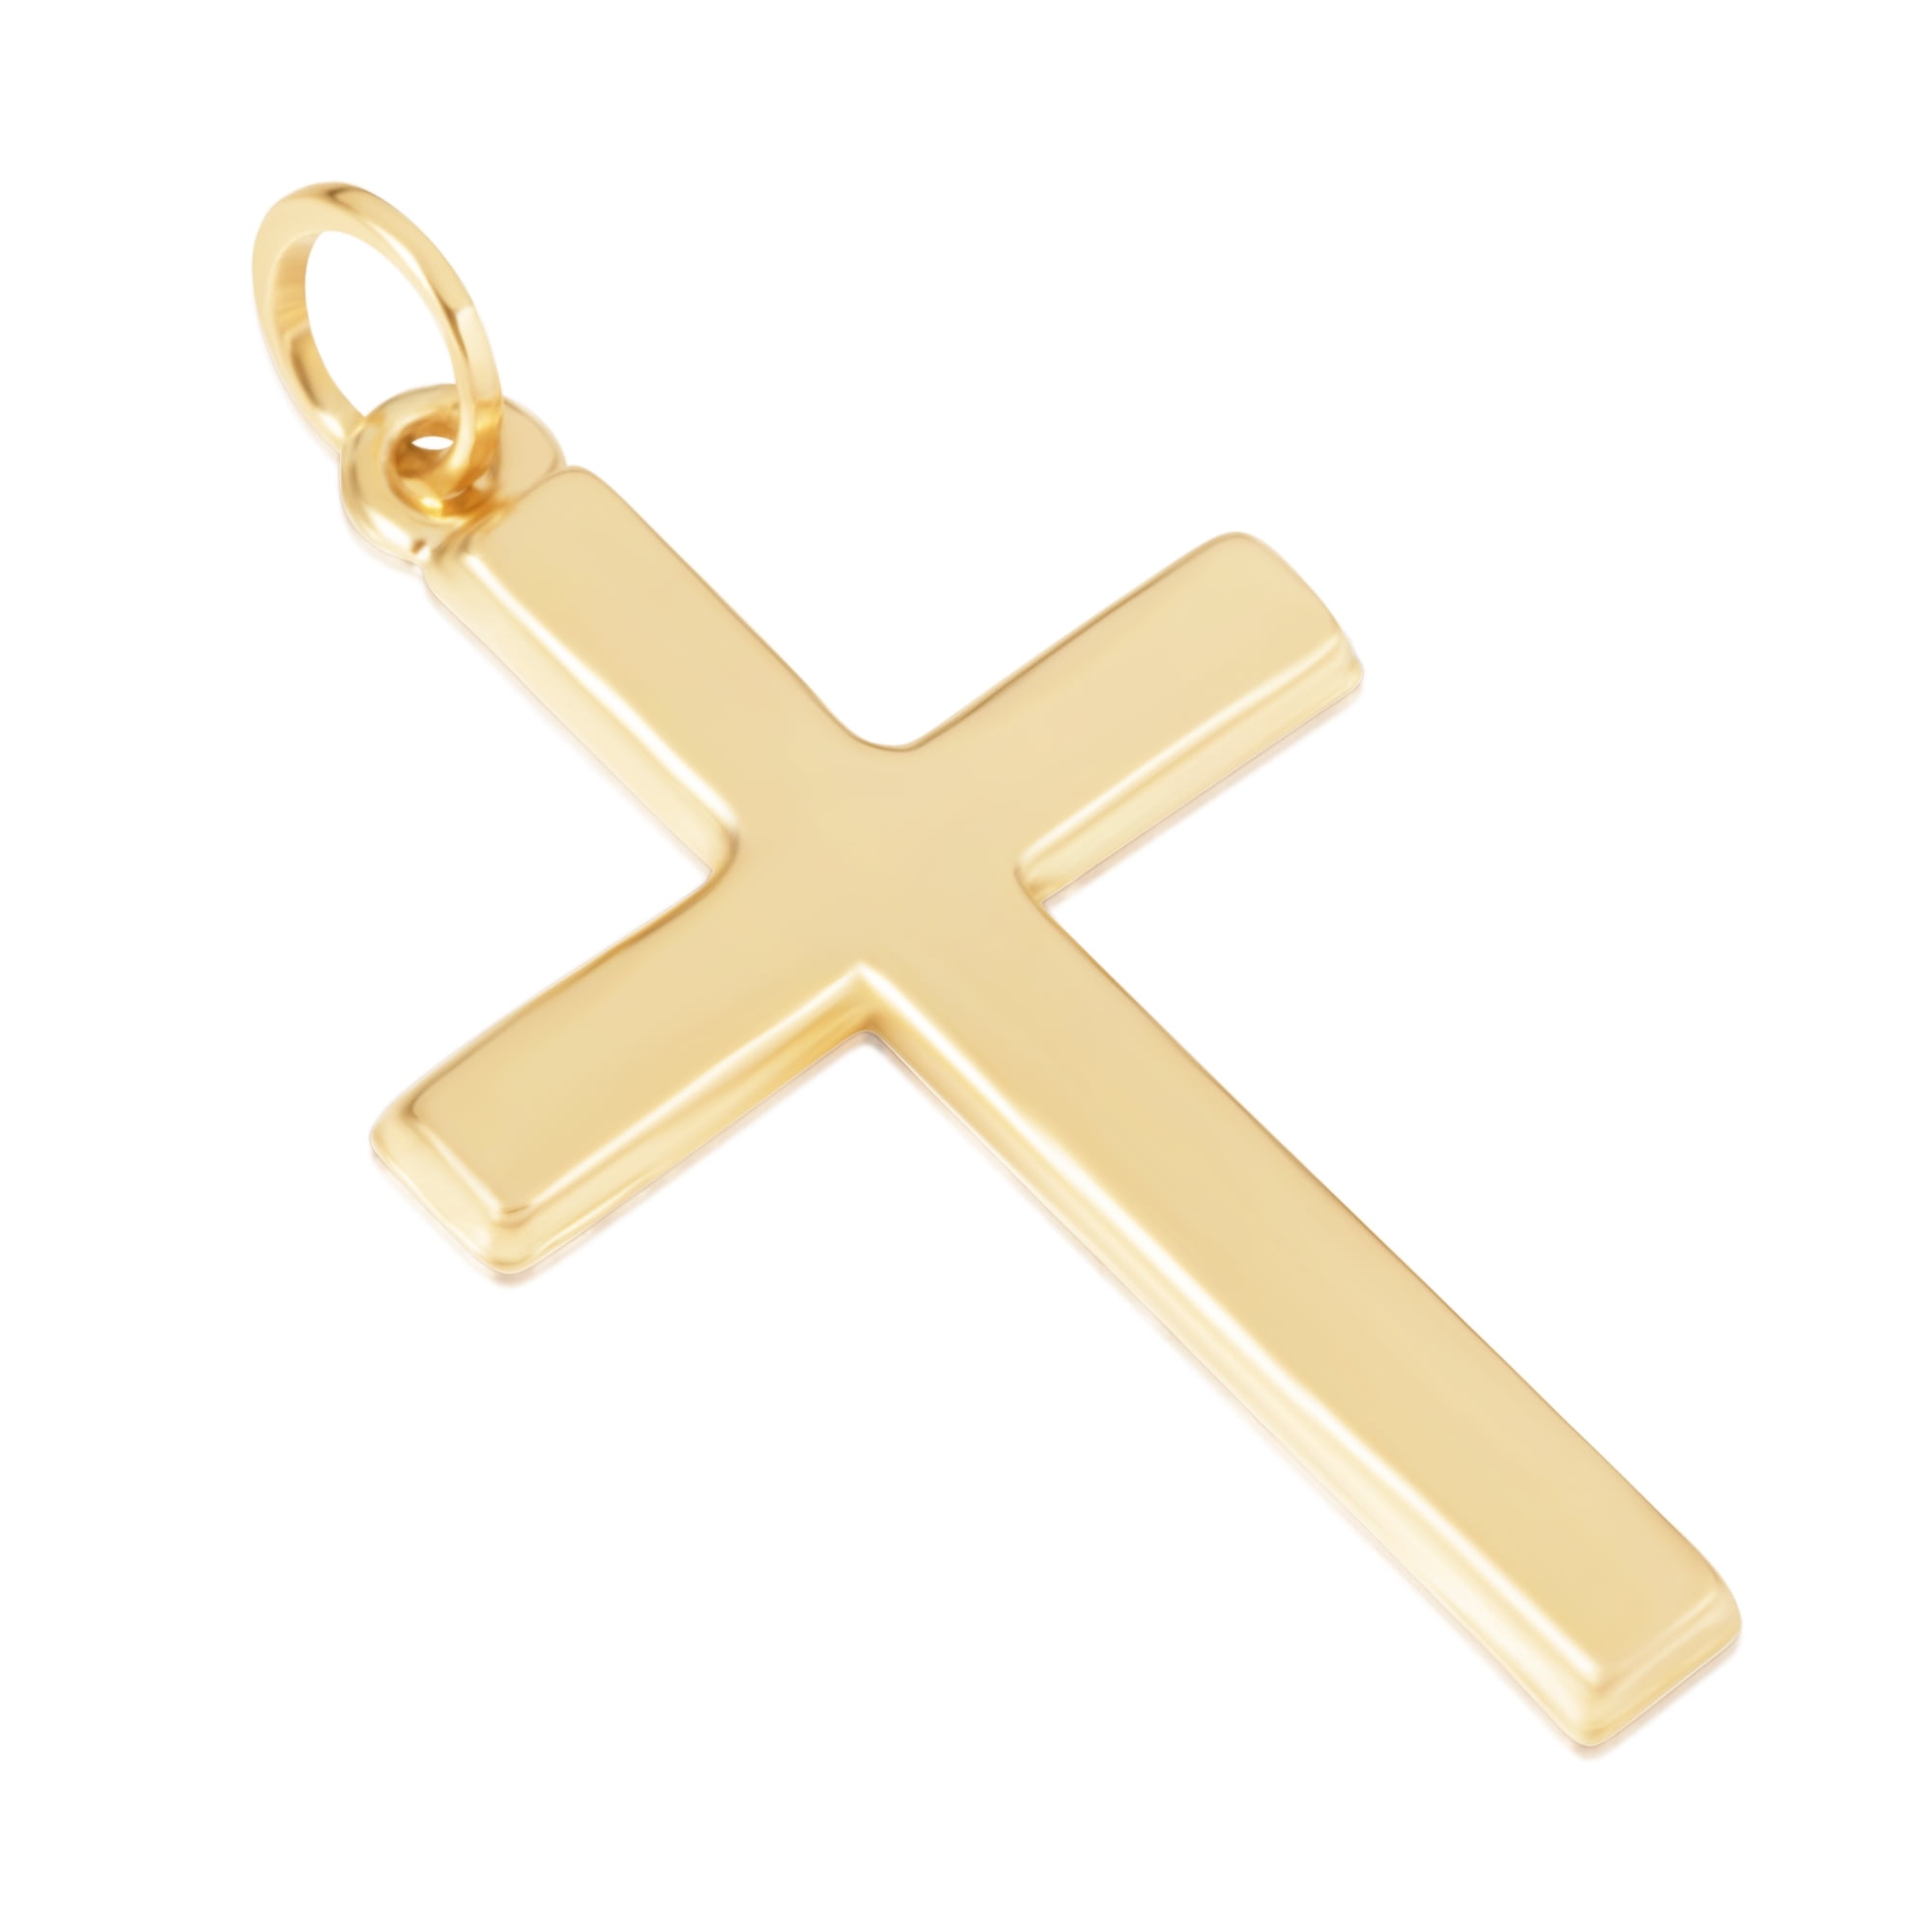 Brass Textured Cross, Religious Large Cross, Brass Cross Charm, Cross Pendant, Mens Cross, Women's Cross 61mm x 43mm 9 Finishes Fast Ship